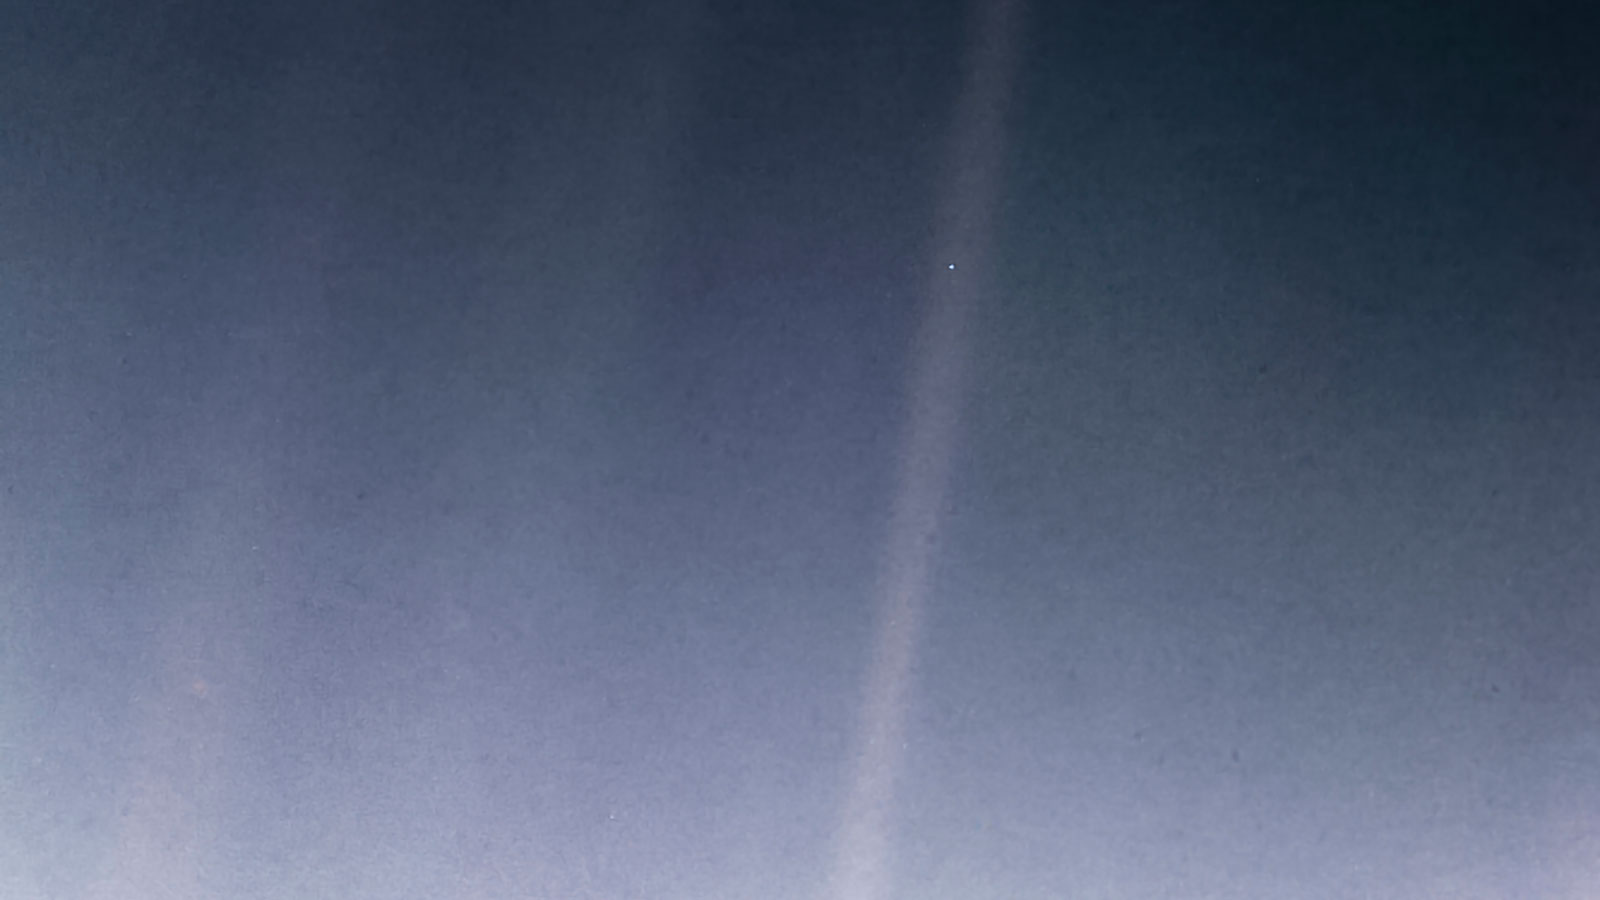 Voyager S Pale Blue Dot Nasa Solar System Exploration